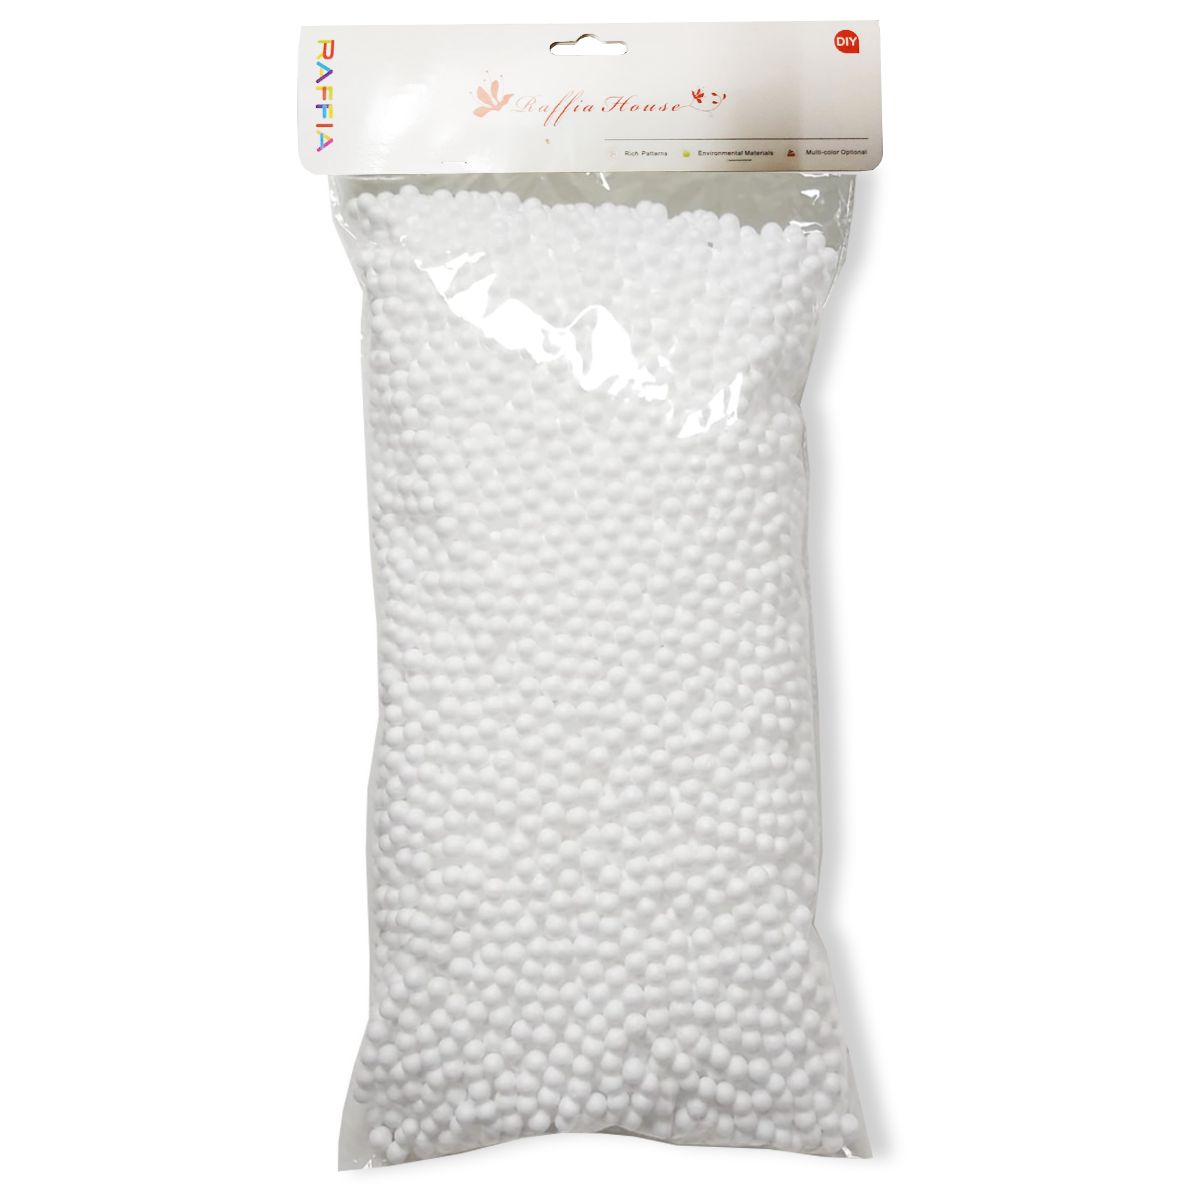 Thermocol Colourful Confetti Balls For Gift Box Filling 50g - White